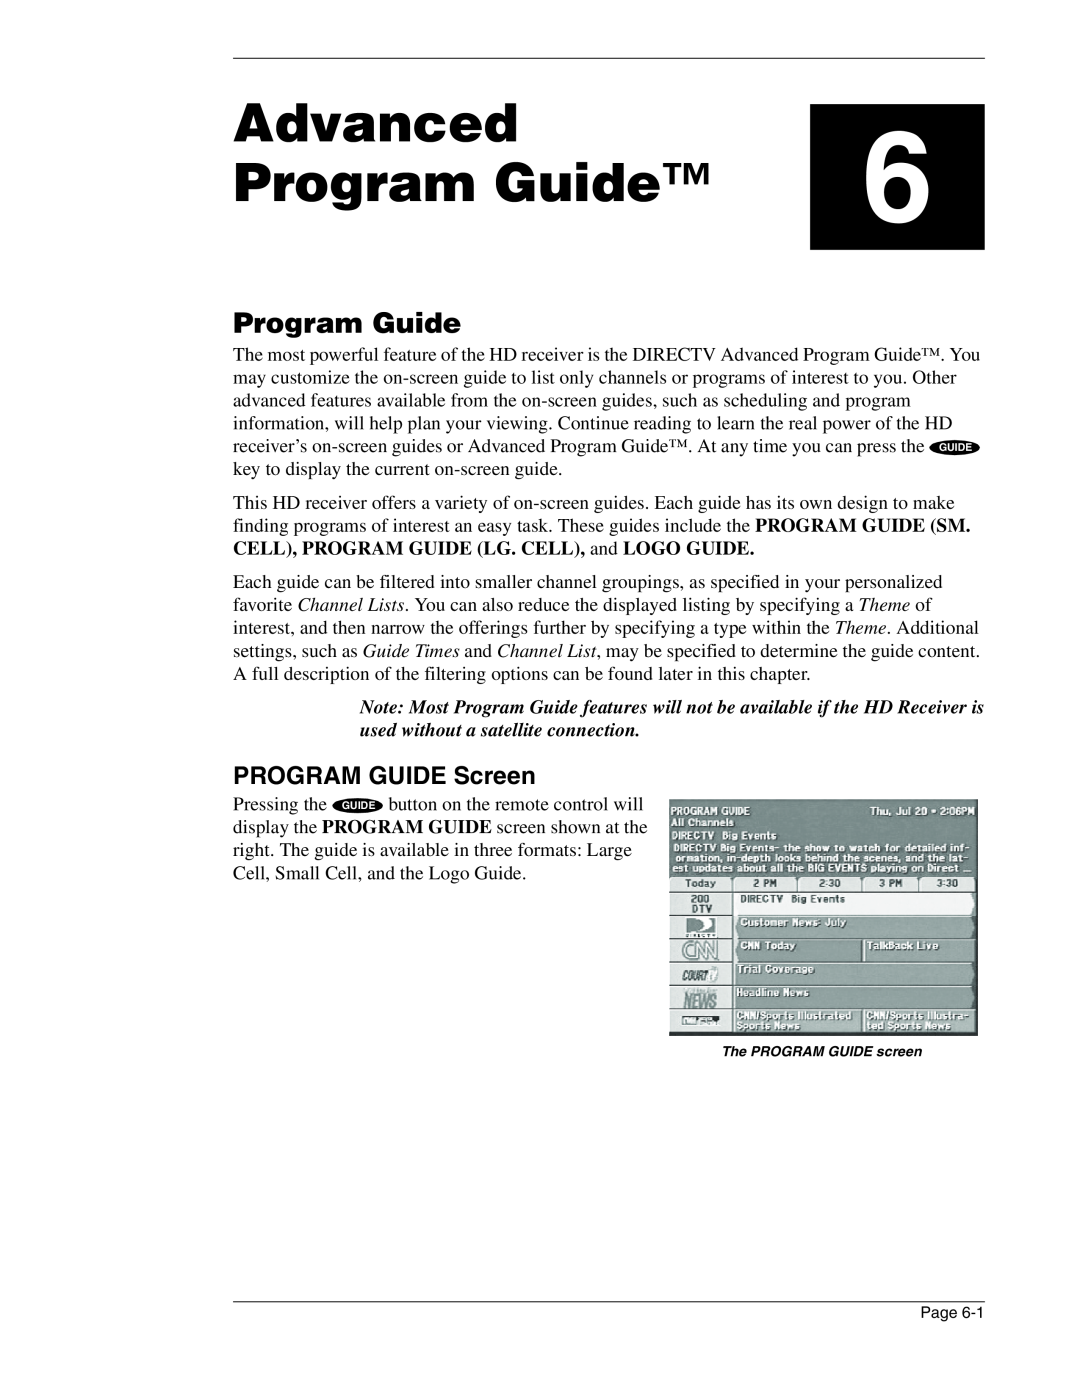 DirecTV HIRD-E86 manual Advanced, Program Guide, PROGRAM GUIDE Screen 